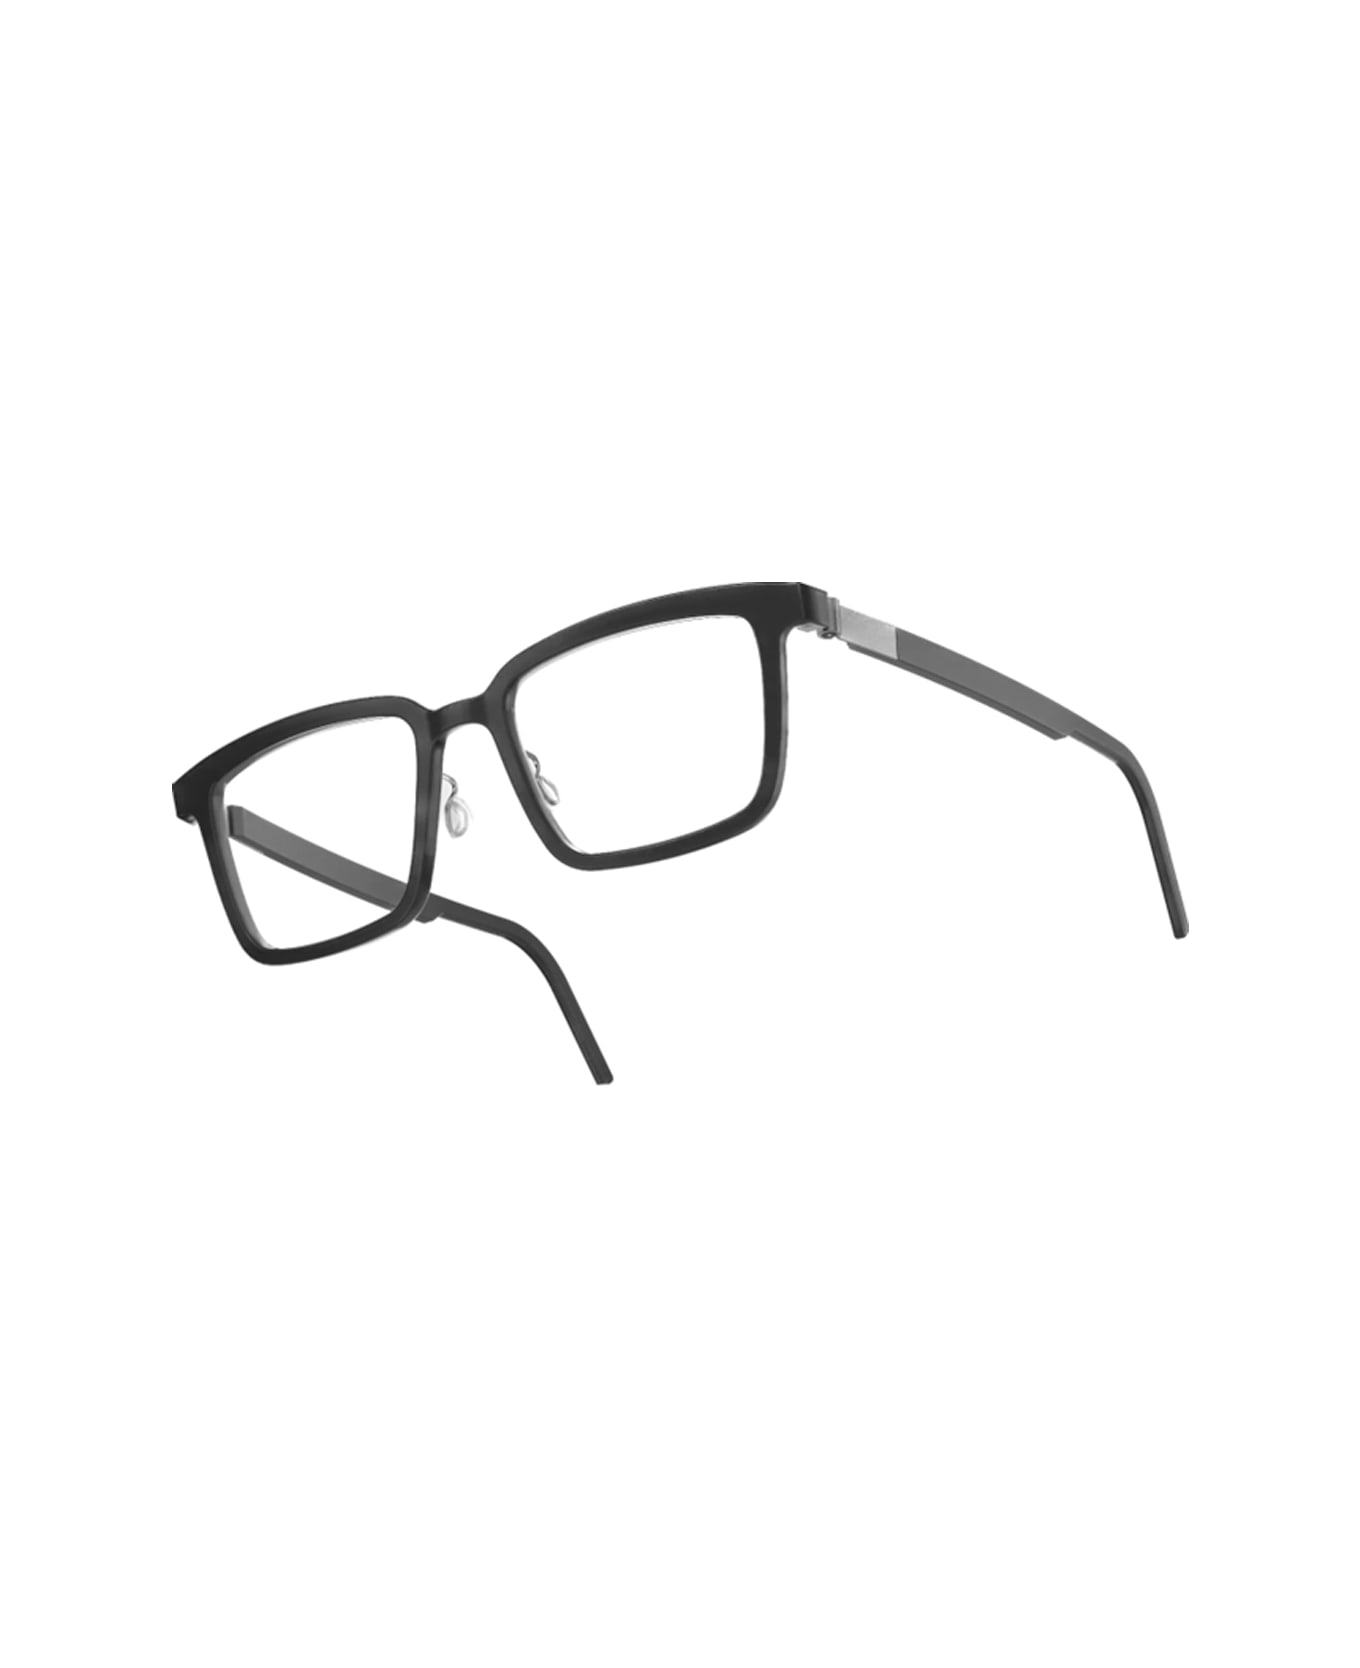 LINDBERG Acetanium 1267 Ag44 K24m/10 Glasses - Nero アイウェア